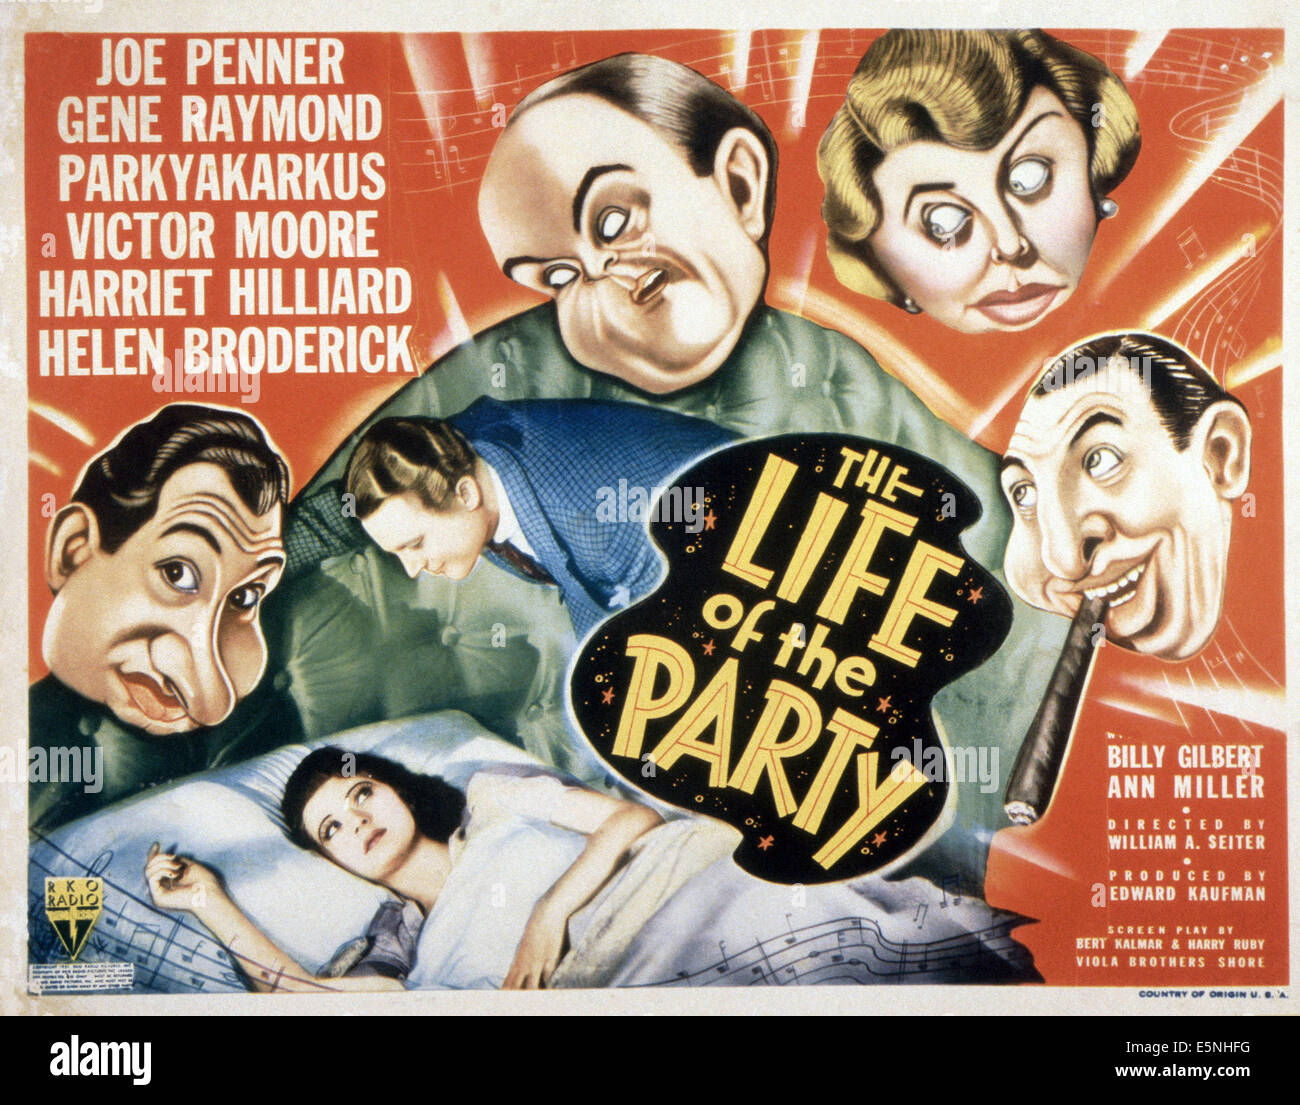 THE LIFE OF THE PARTY, from left: Parkyakarkus, Harriet Hilliard, Gene Raymond, Victor Moore, Helen Broderick, Joe Penner, 1937 Stock Photo